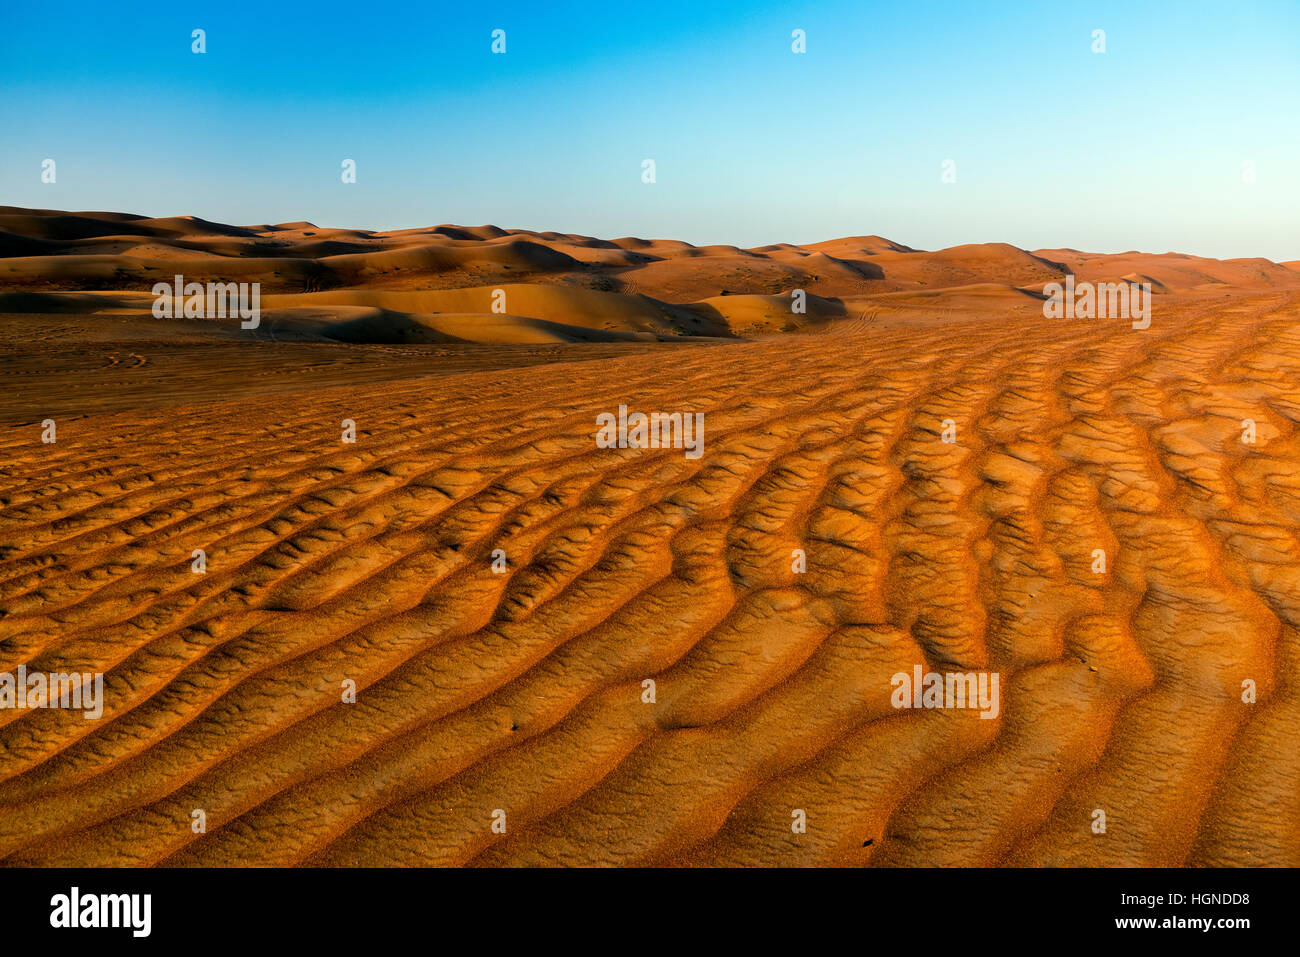 Sunset view of sand dunes in the Rub' al Khali desert, Al Ain, United Arab Emirates Stock Photo